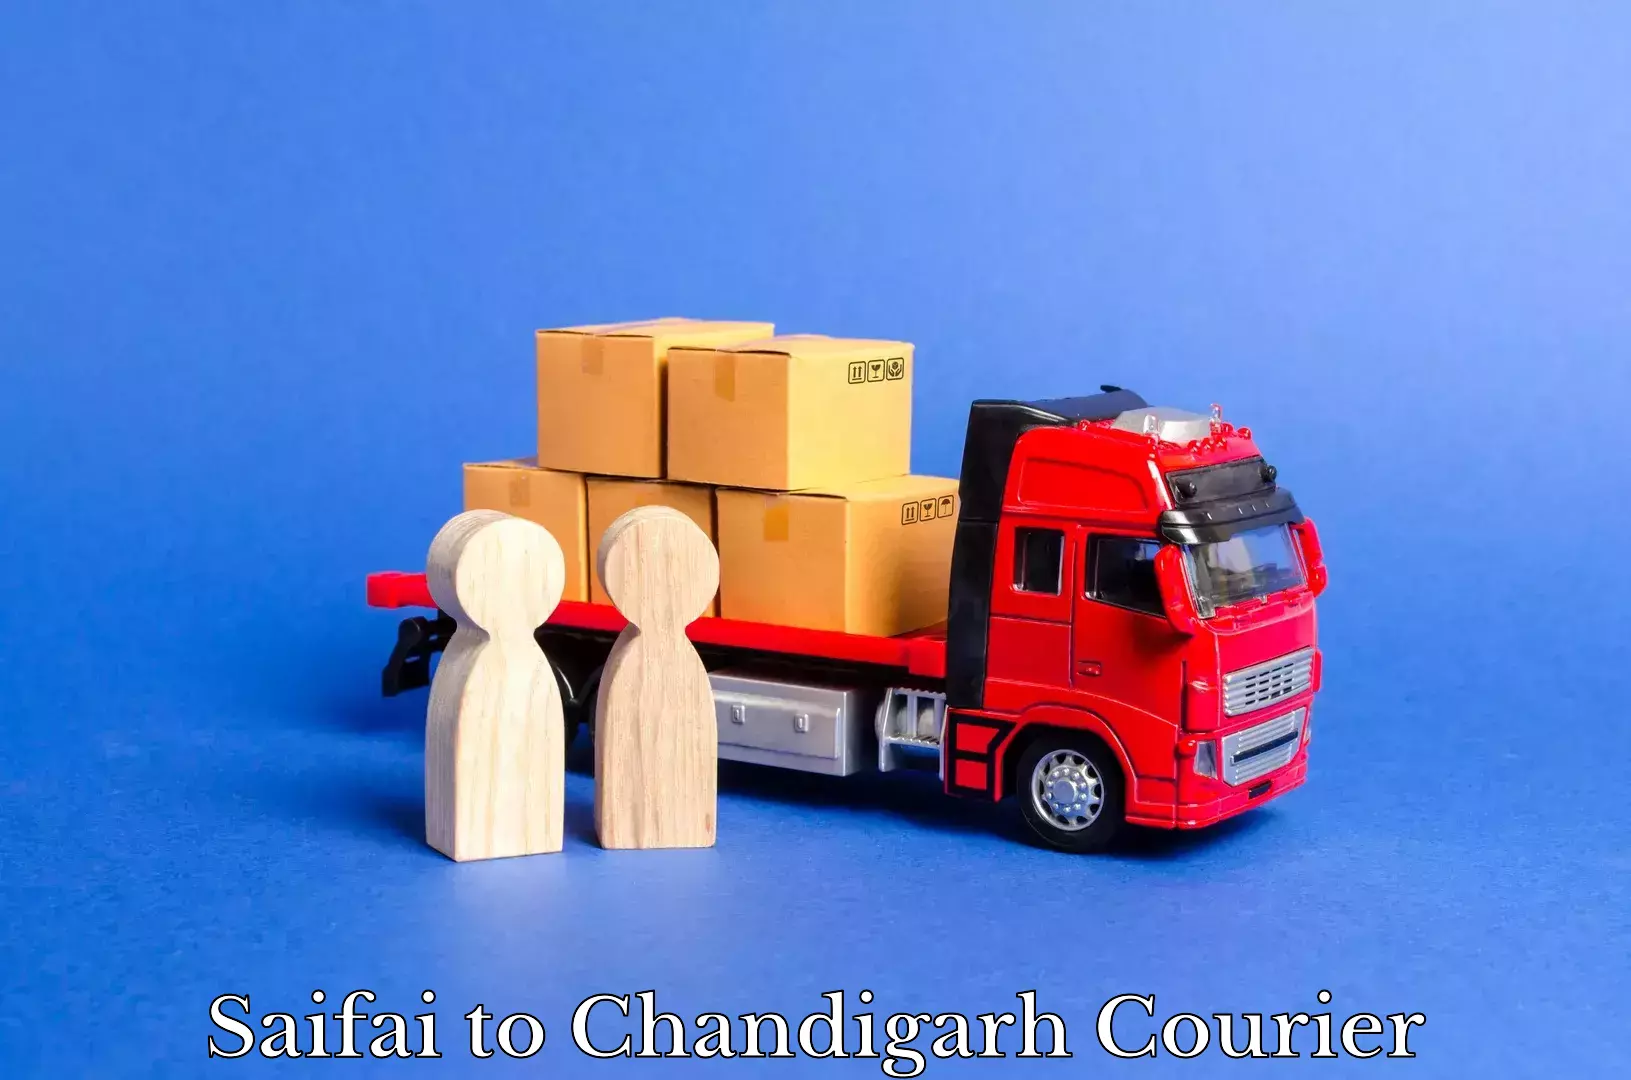 International courier networks Saifai to Chandigarh